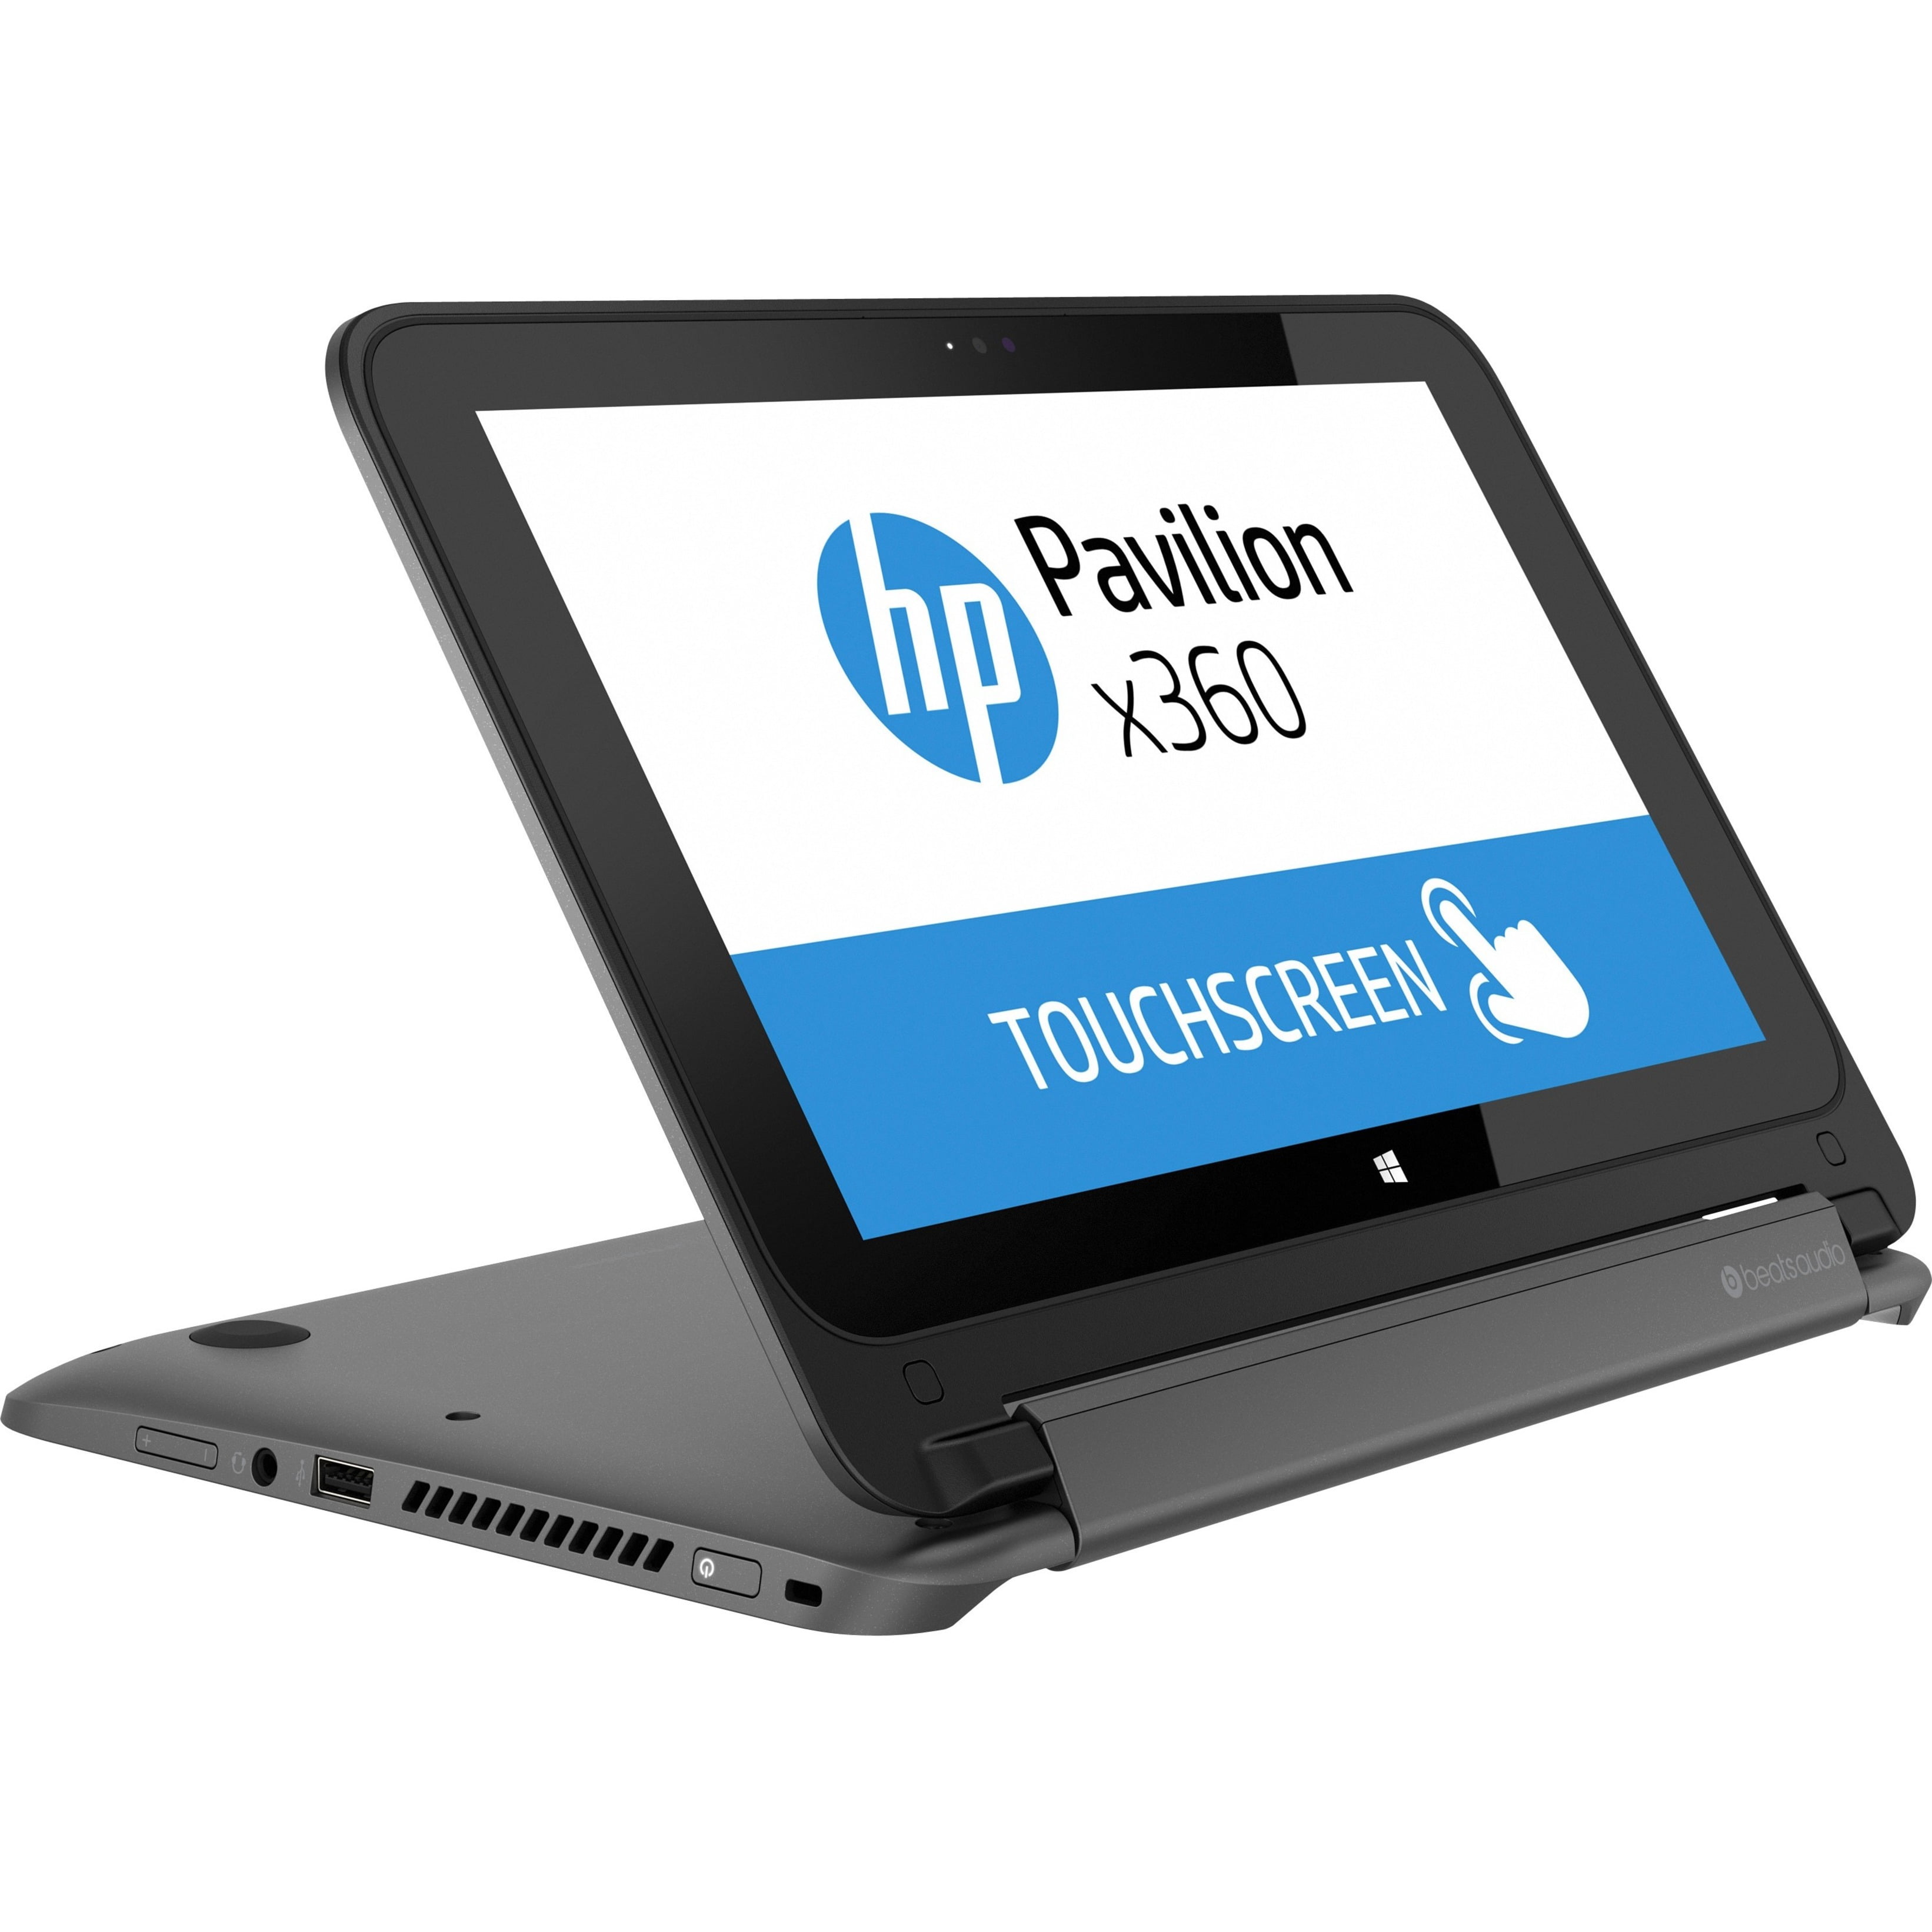 HP Pavilion x360 2-in-1 11.6 Touch-Screen Laptop Intel Pentium 4GB Memory  500GB Hard Drive Smoke Silver 11-n010dx - Best Buy